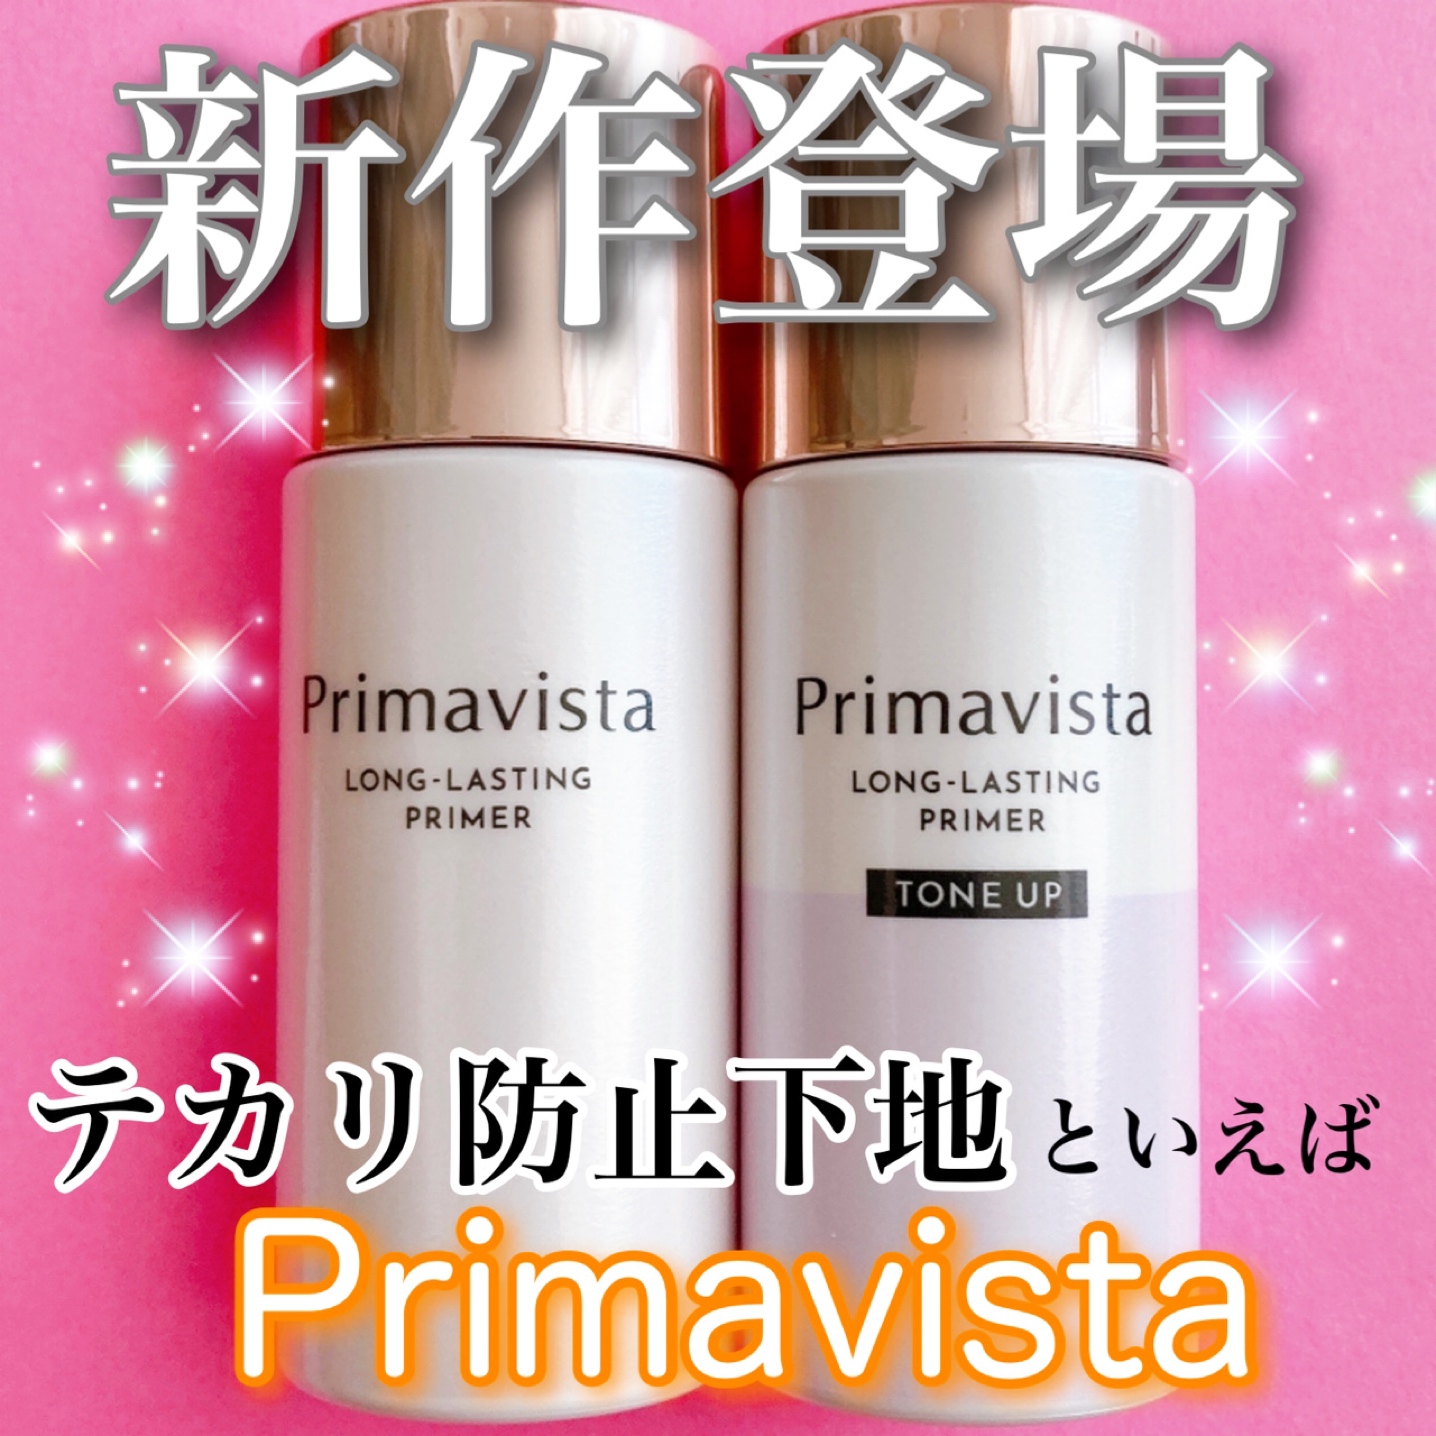 SOFINA Primavista(ソフィーナ プリマヴィスタ)皮脂くずれ防止 化粧下地を使ったyunaさんのクチコミ画像1